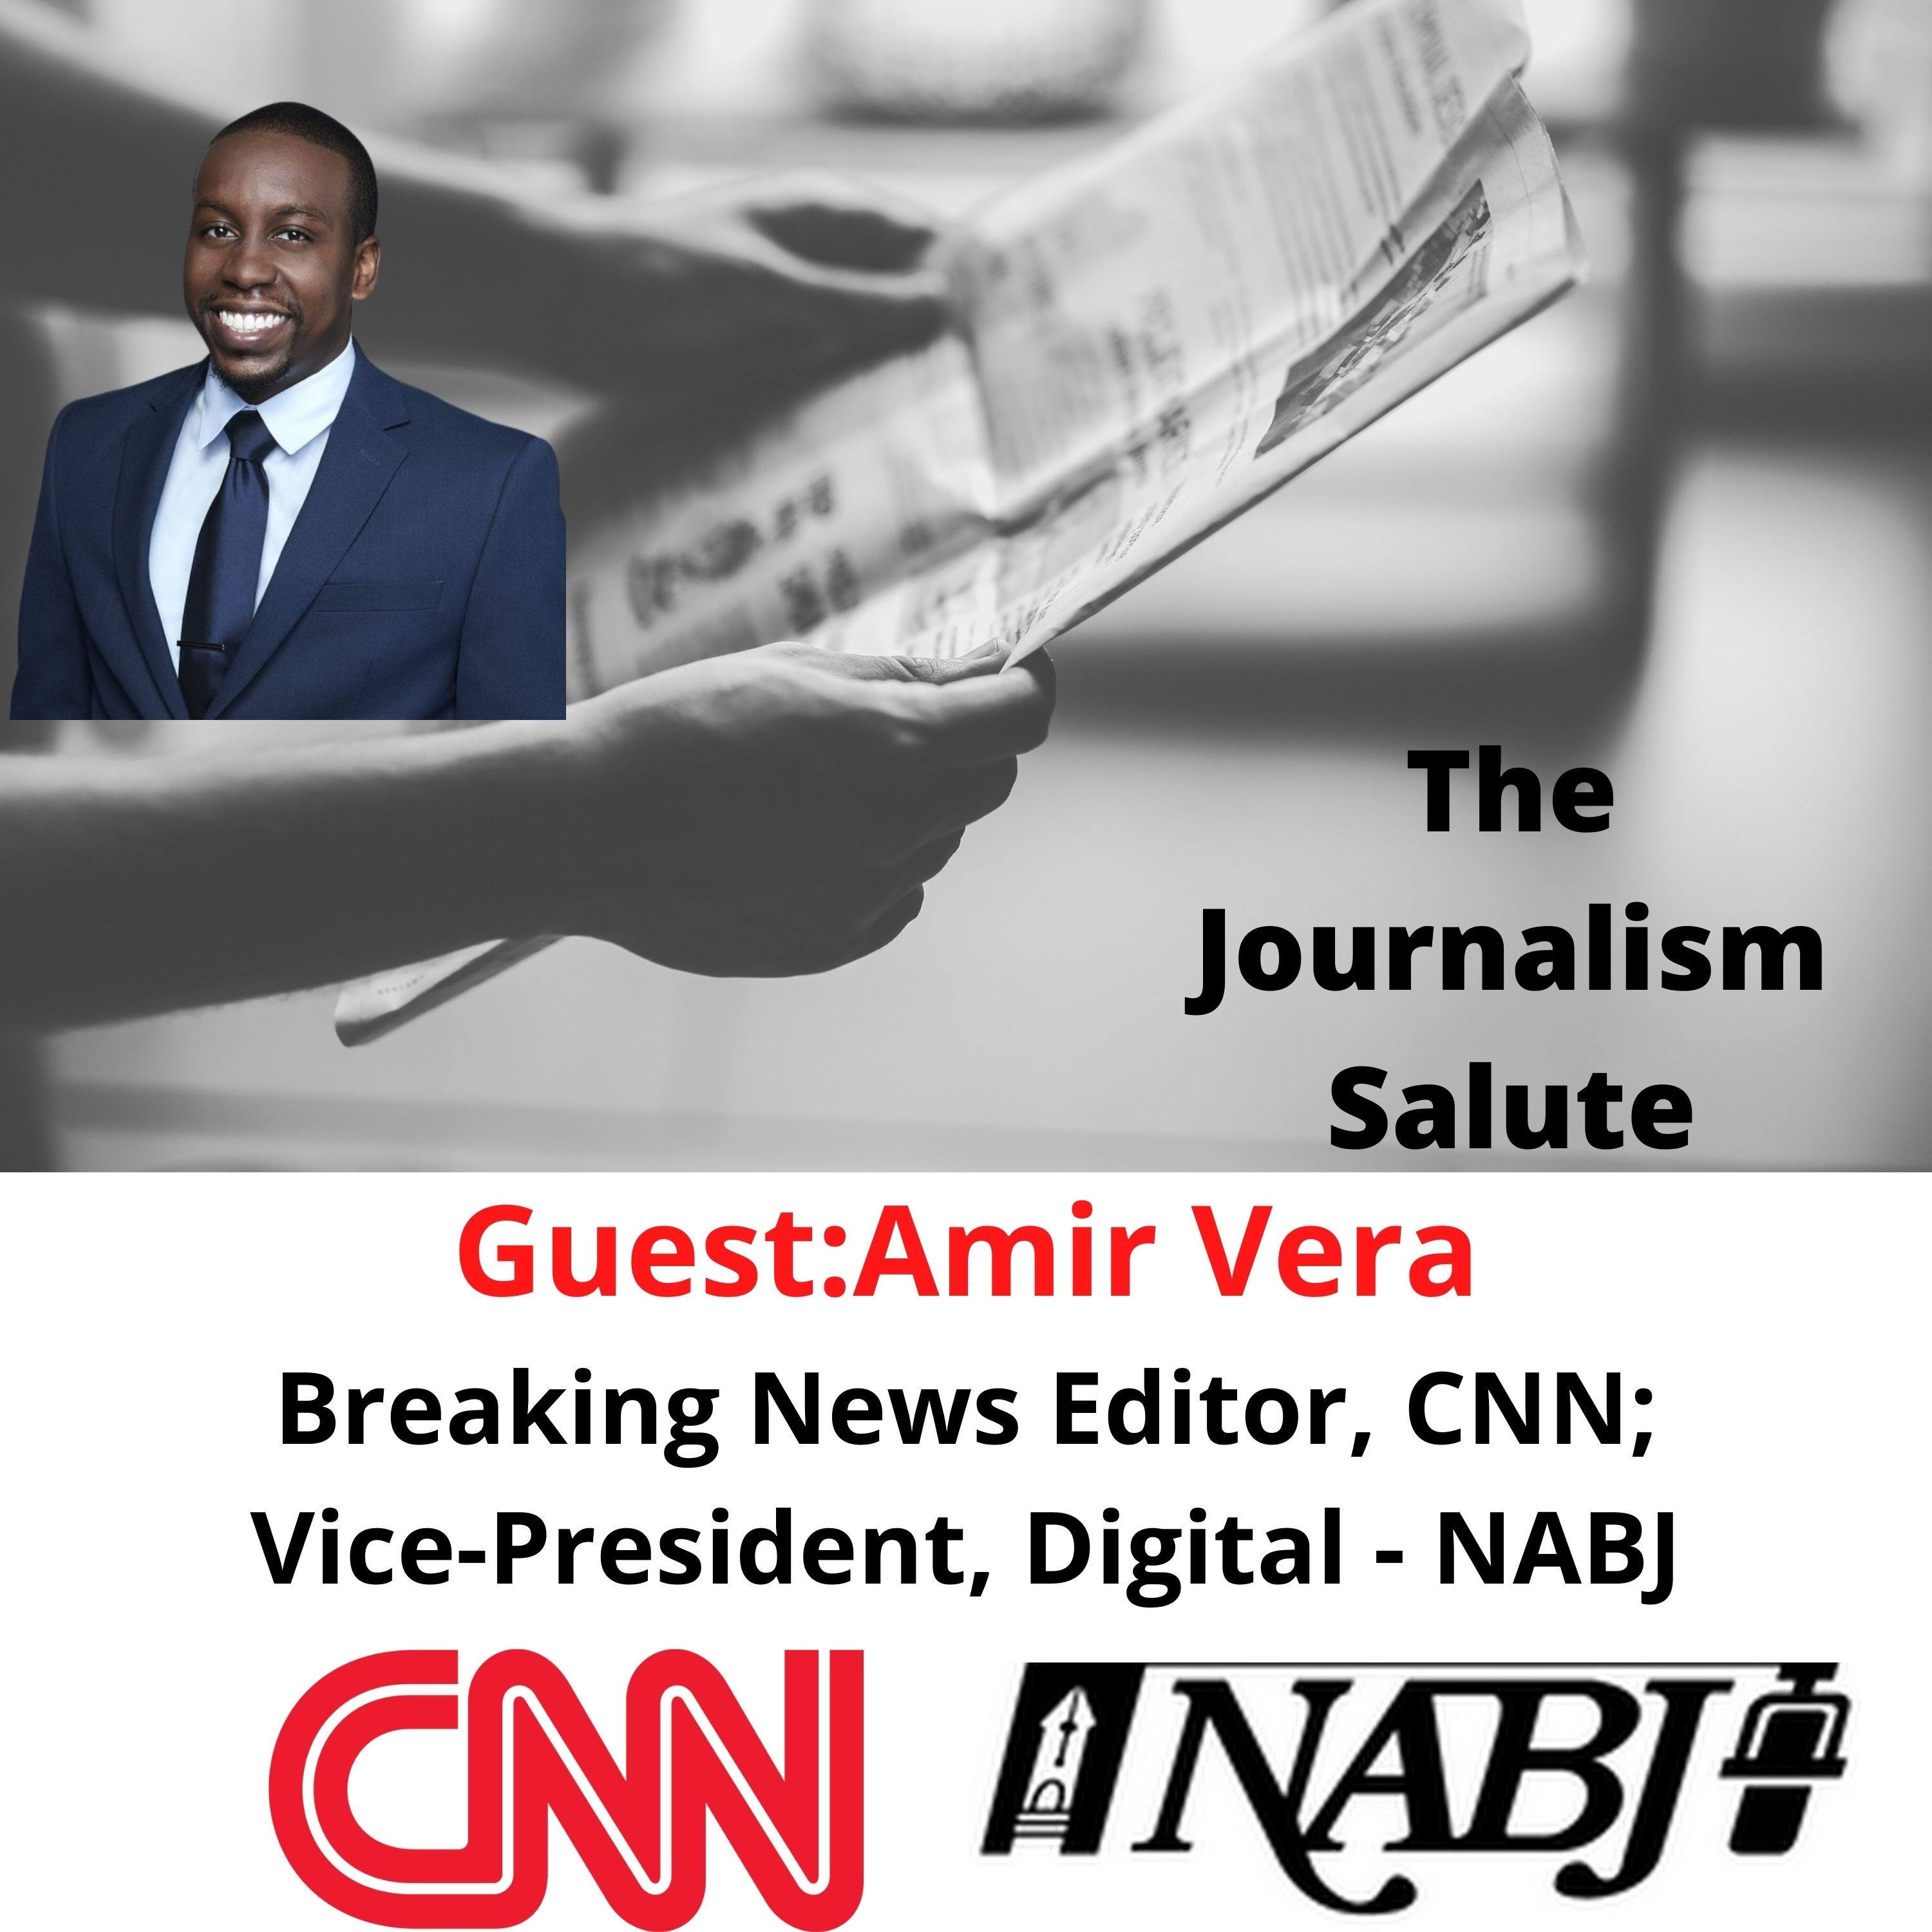 Amir Vera, Breaking News Editor: CNN; vice-president of digital, NABJ